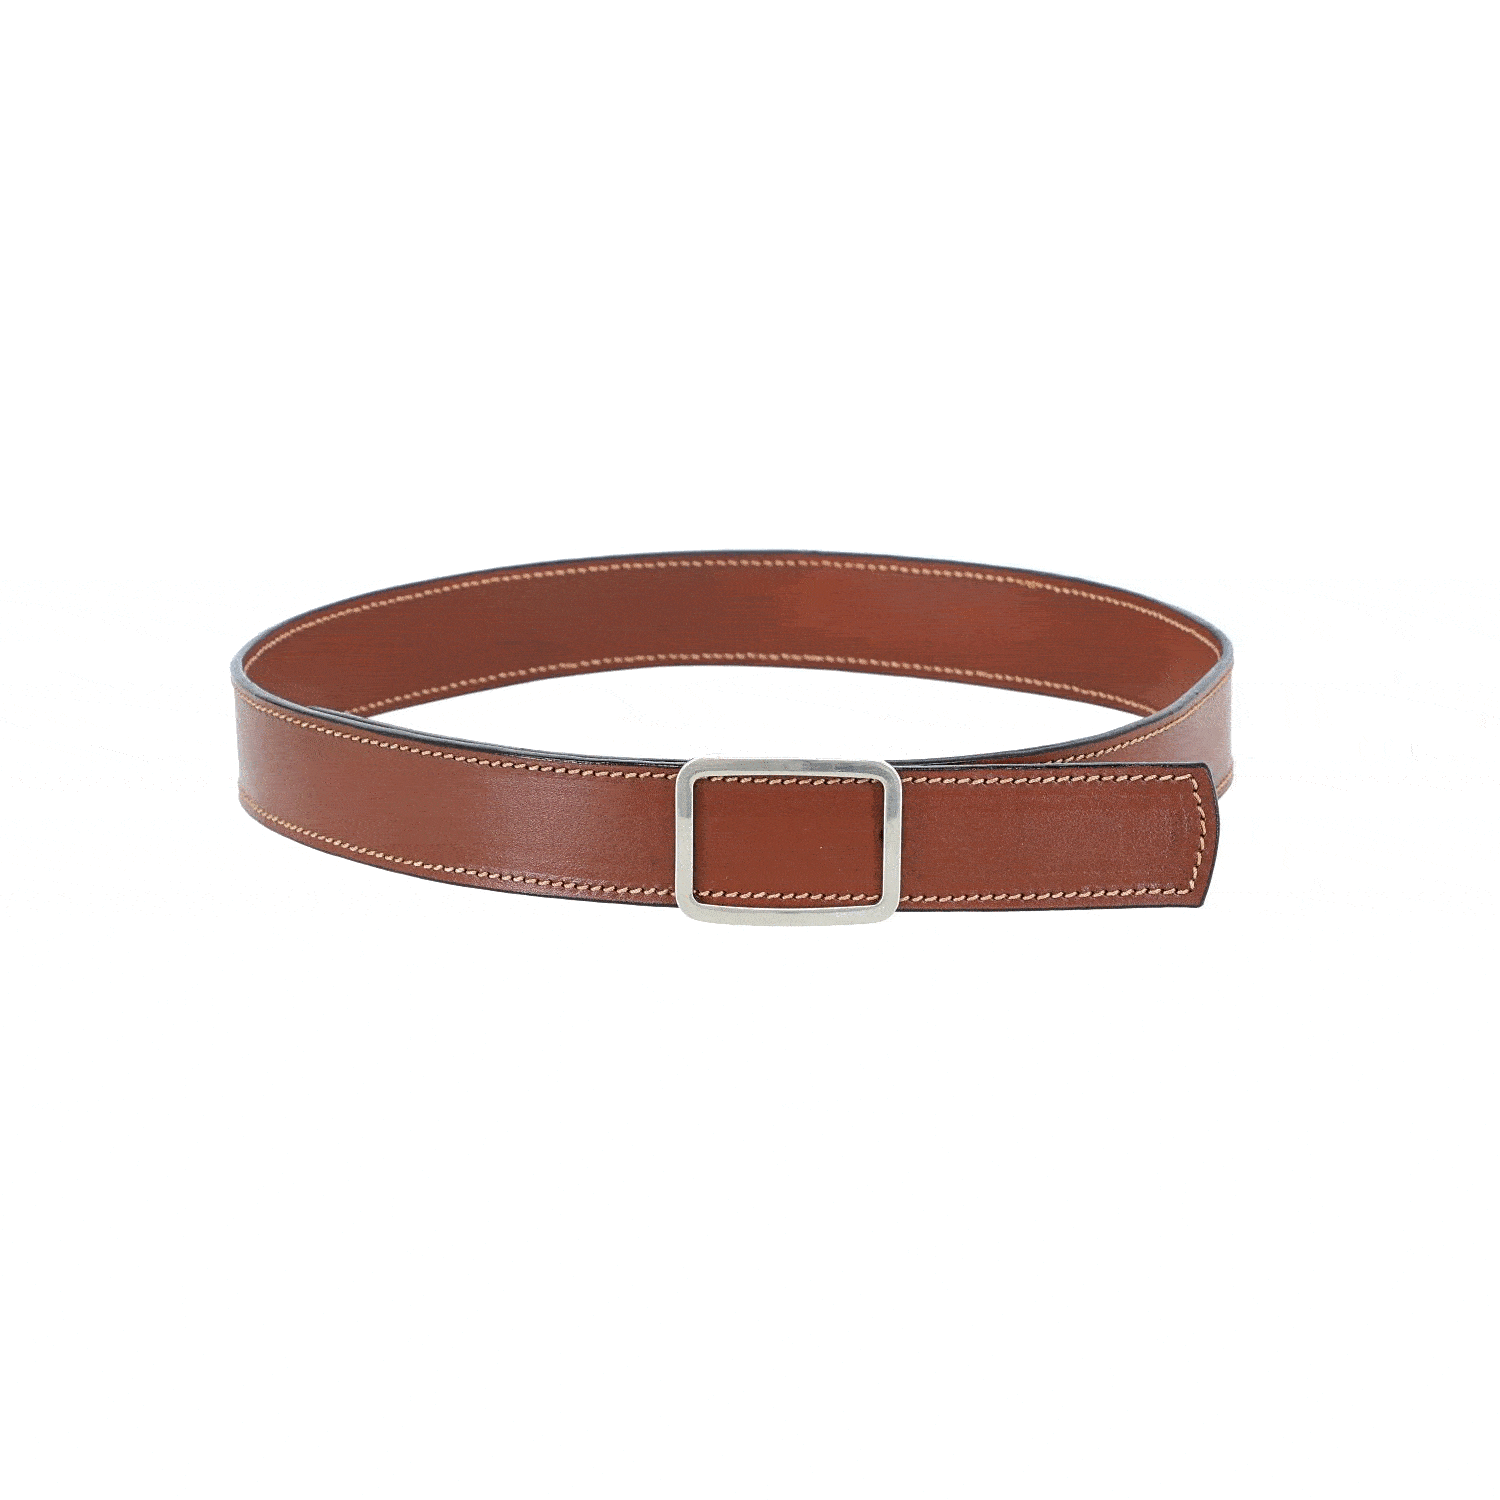 Sturdy Elegant Leather Belt